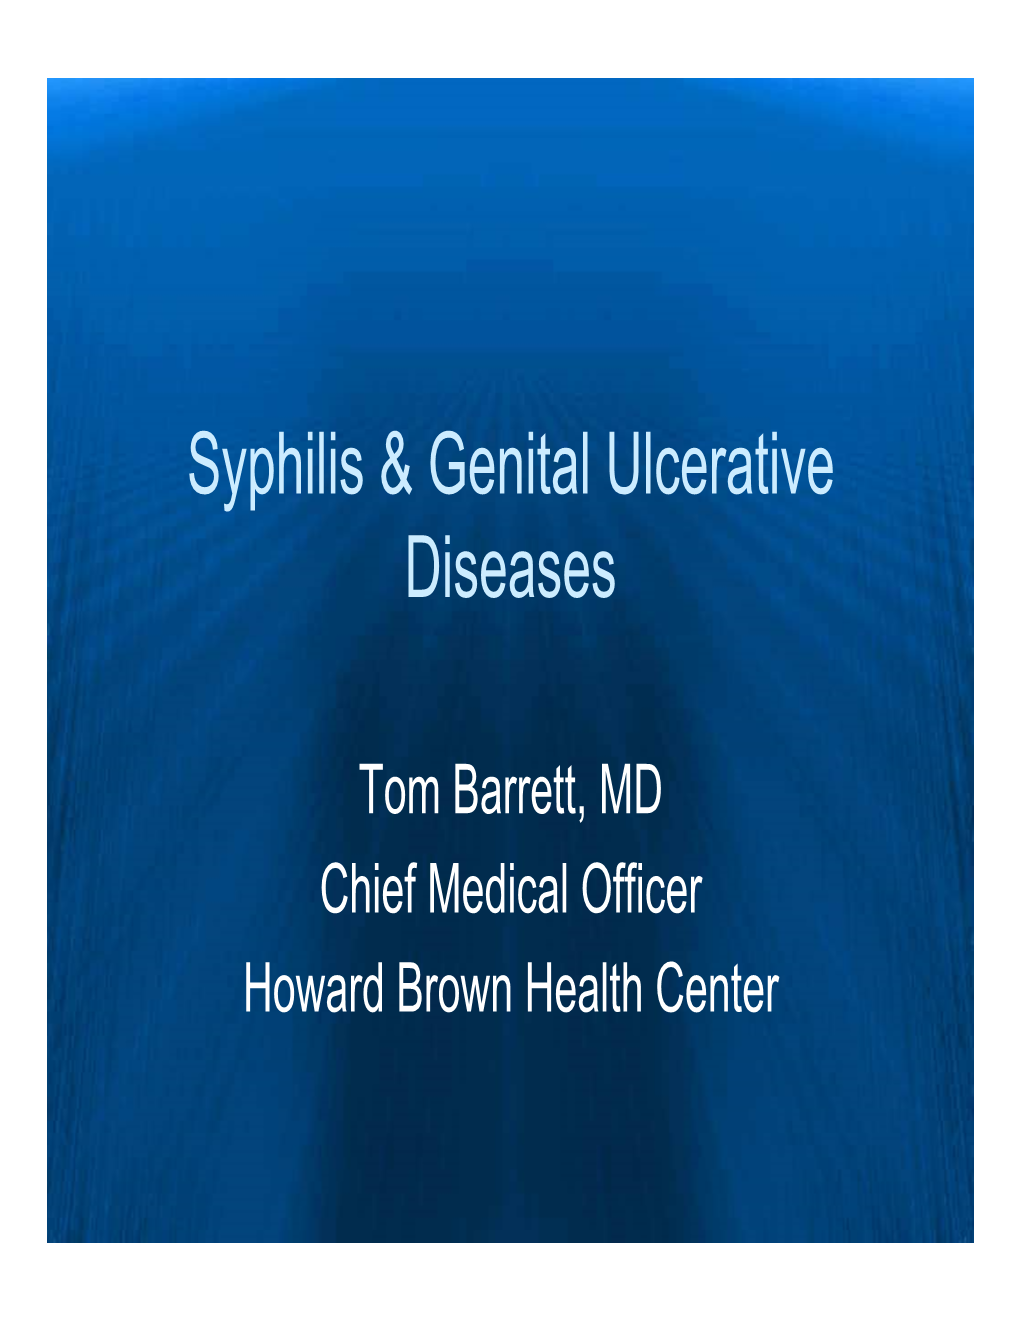 Syphilis & Genital Ulcerative Diseases